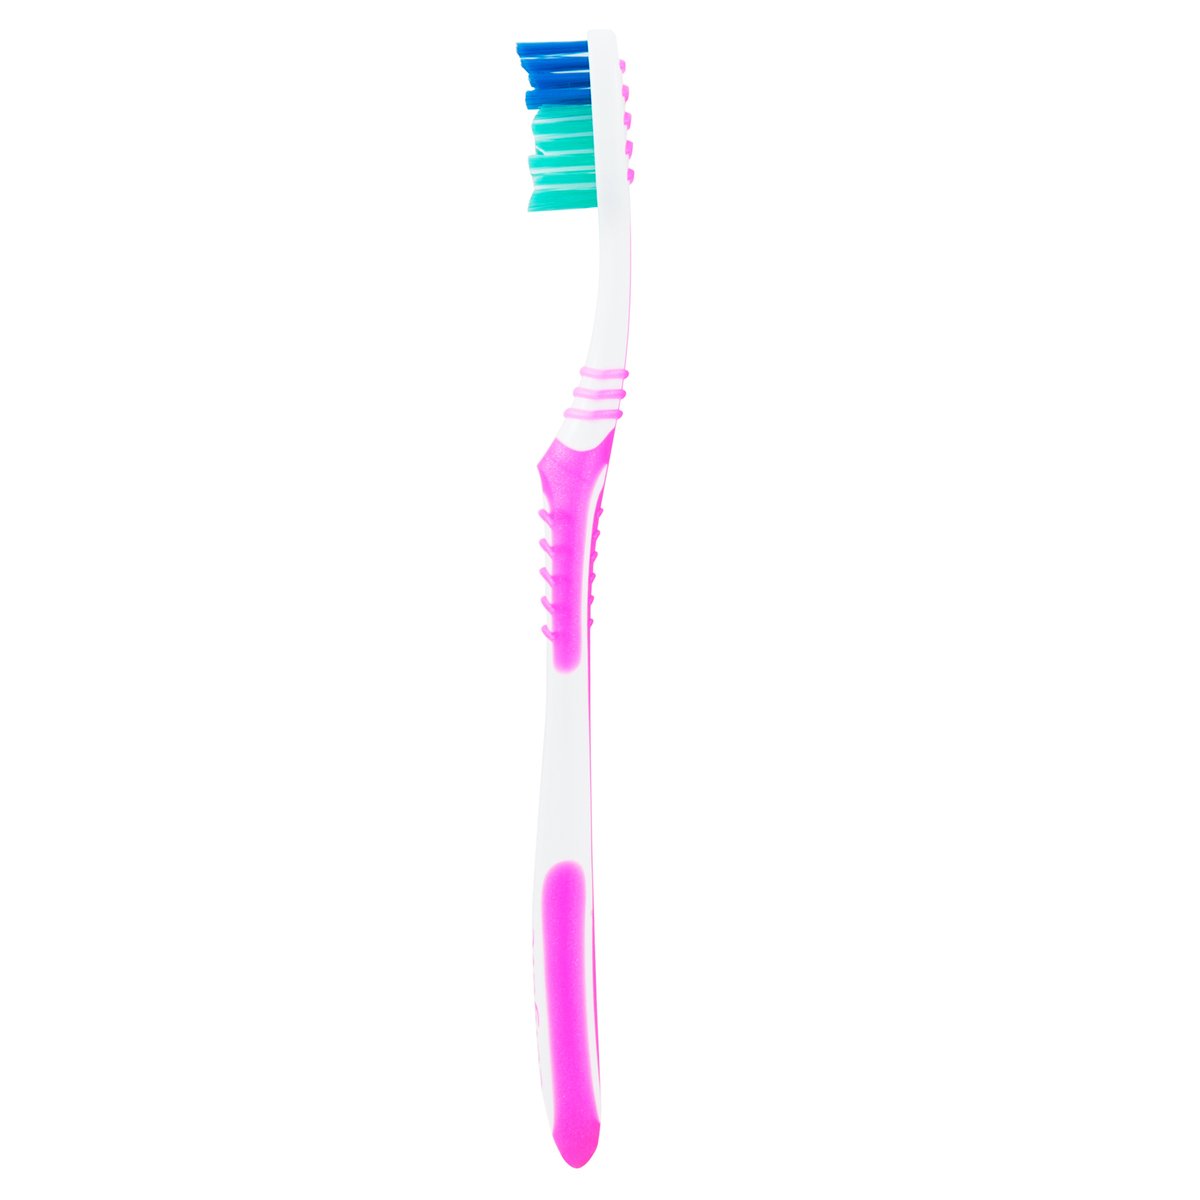 Colgate Toothbrush Extra Clean Medium Assorted Colour 1 pc